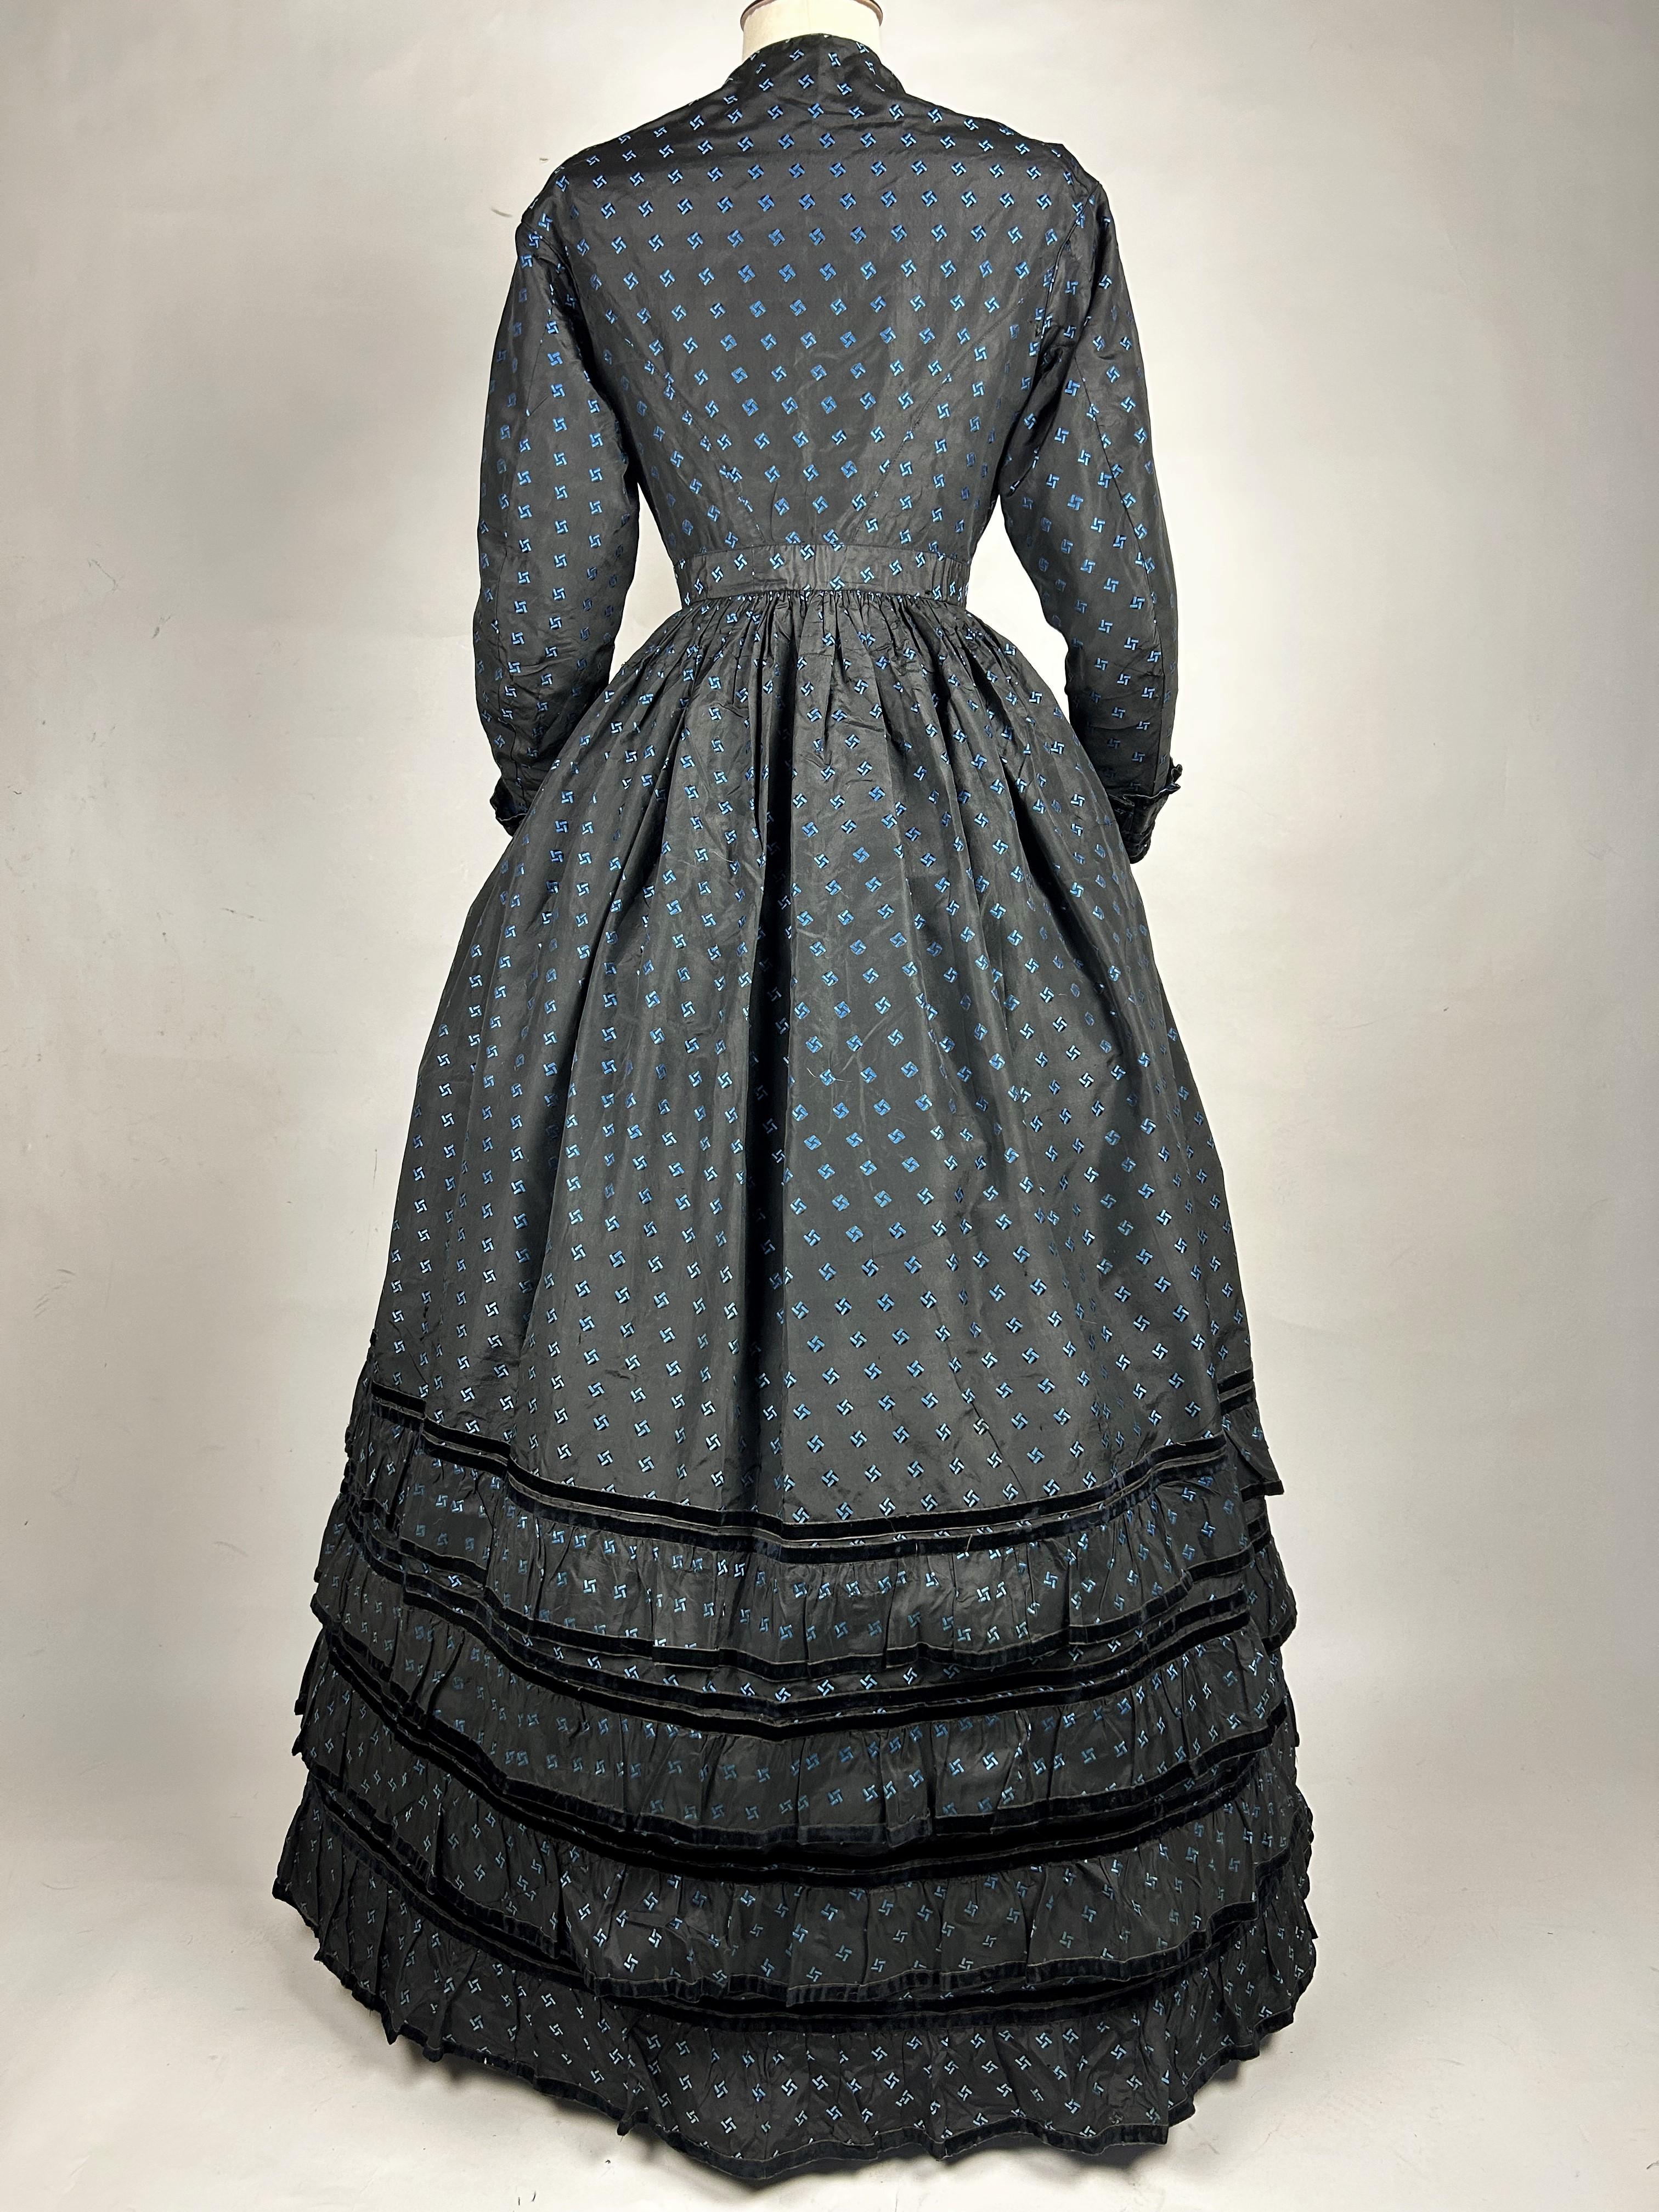 Black A Crinoline Day dress in black taffeta brocaded silk brocaded France Circa 1870